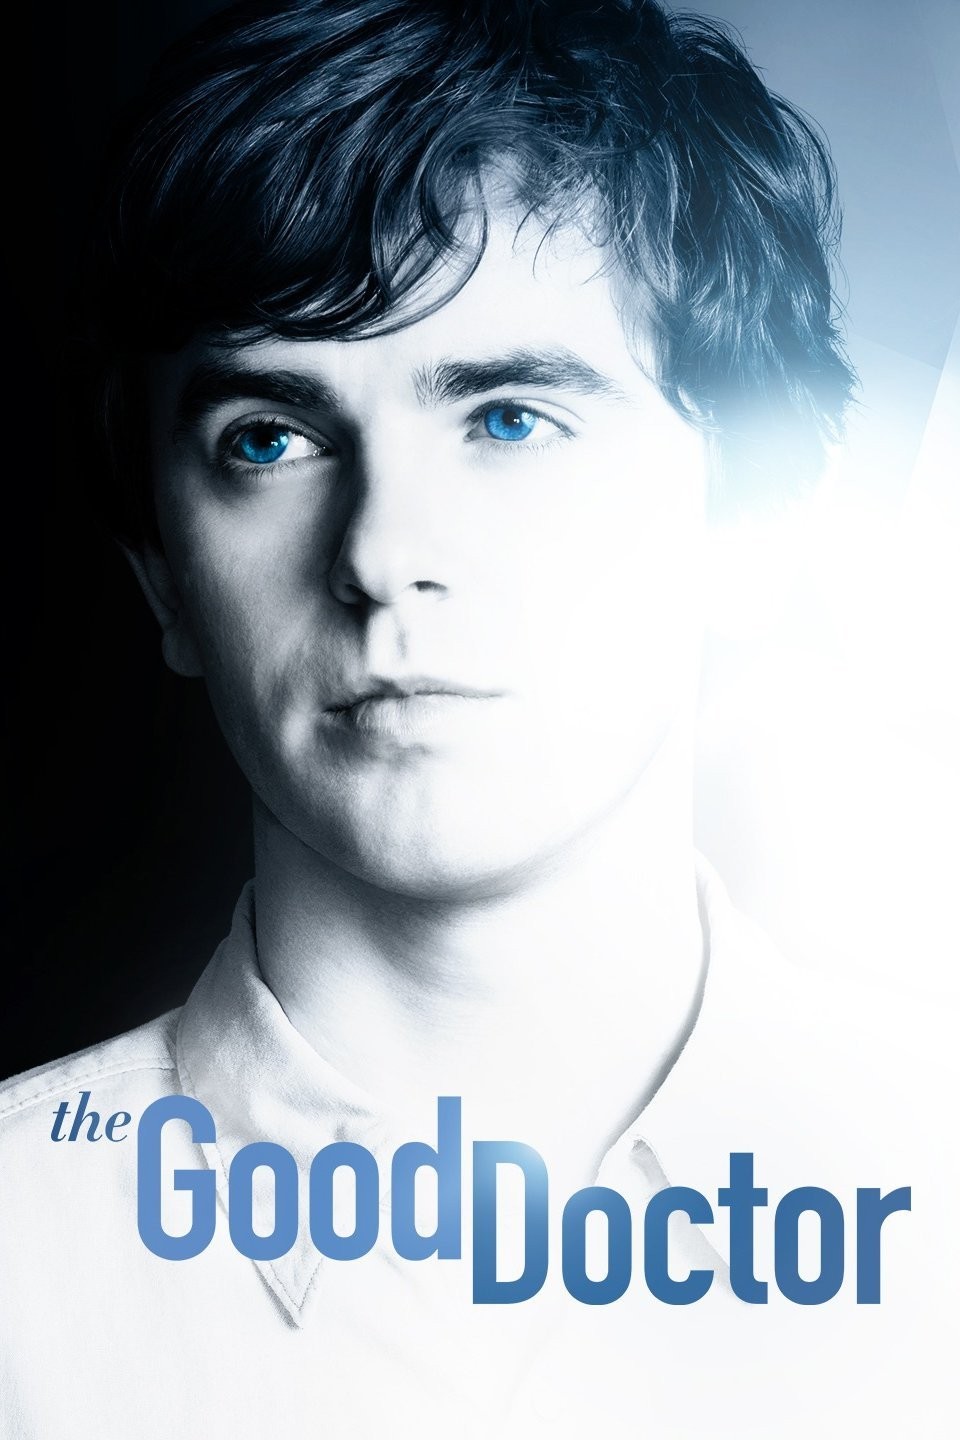 The Good Doctor (TV Series 2017– ) - IMDb